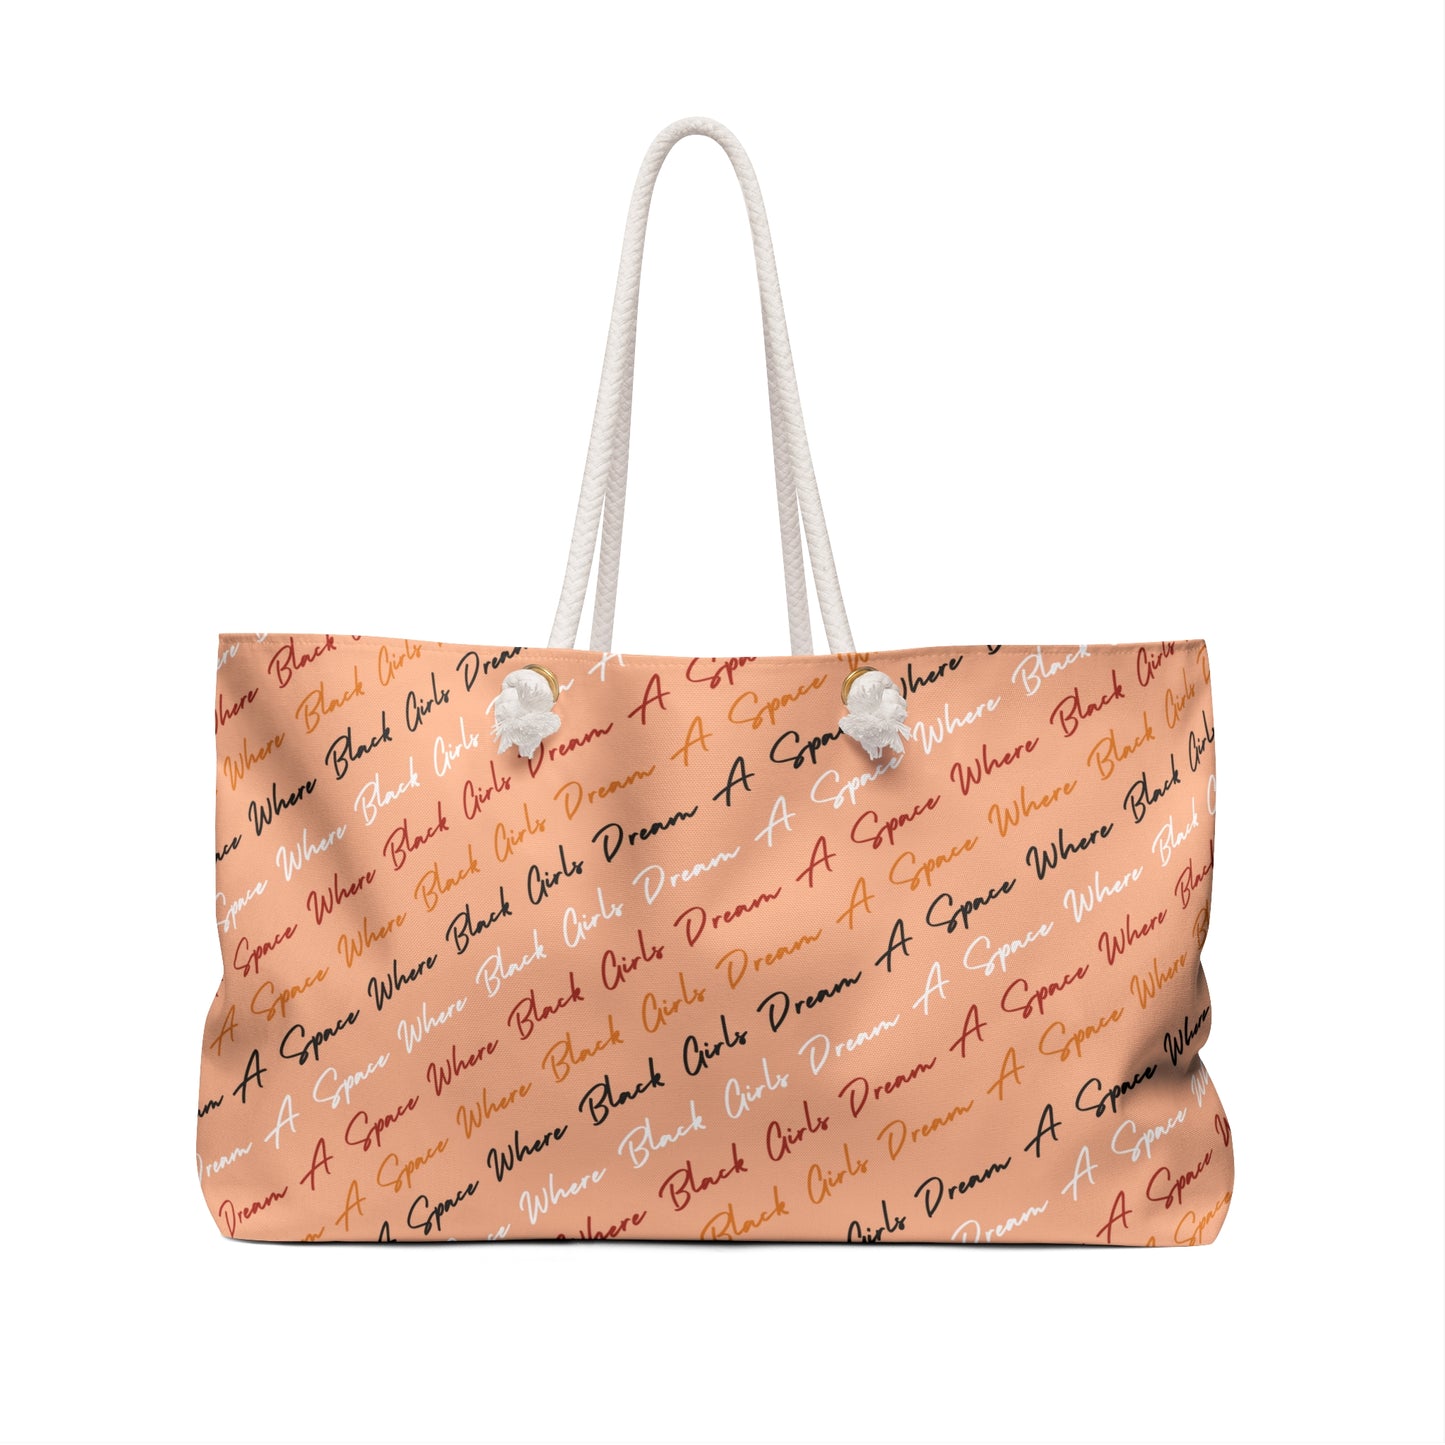 Artemis & Athena Signature Weekender Bag in Peach Fuzz